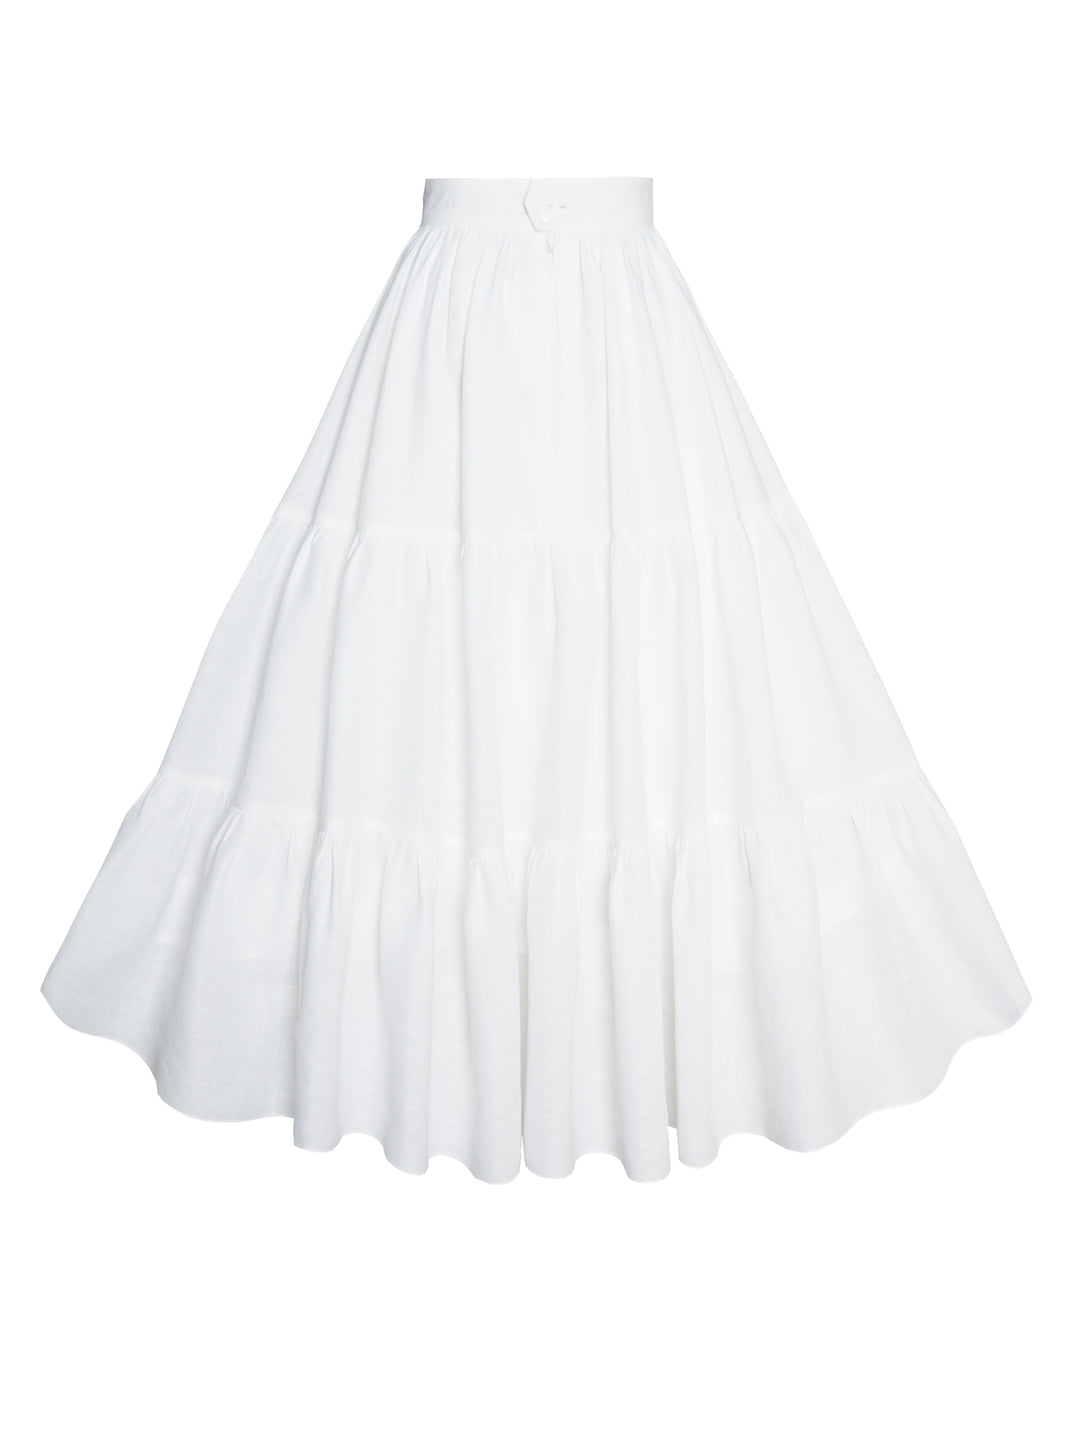 MTO - Pippa Skirt in White Linen